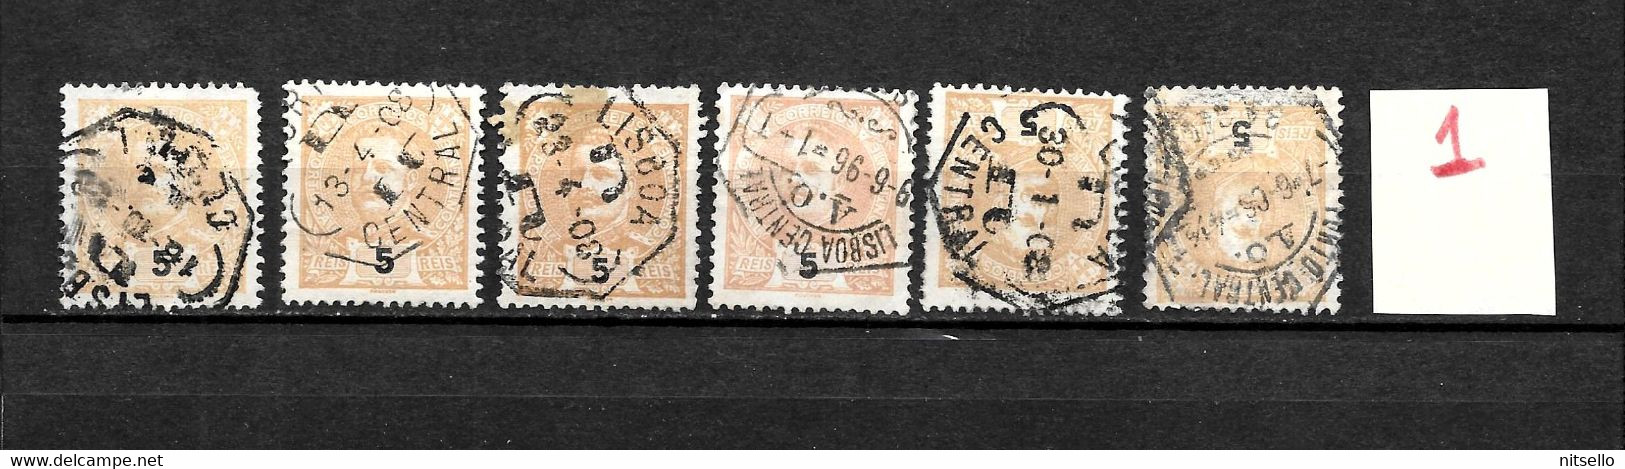 LOTE 1707  ////  PORTUGAL   YVERT Nº: 125 VARIEDAD DE COLOR Y MATASELLOS     ¡¡¡ LIQUIDATION !!! - Used Stamps